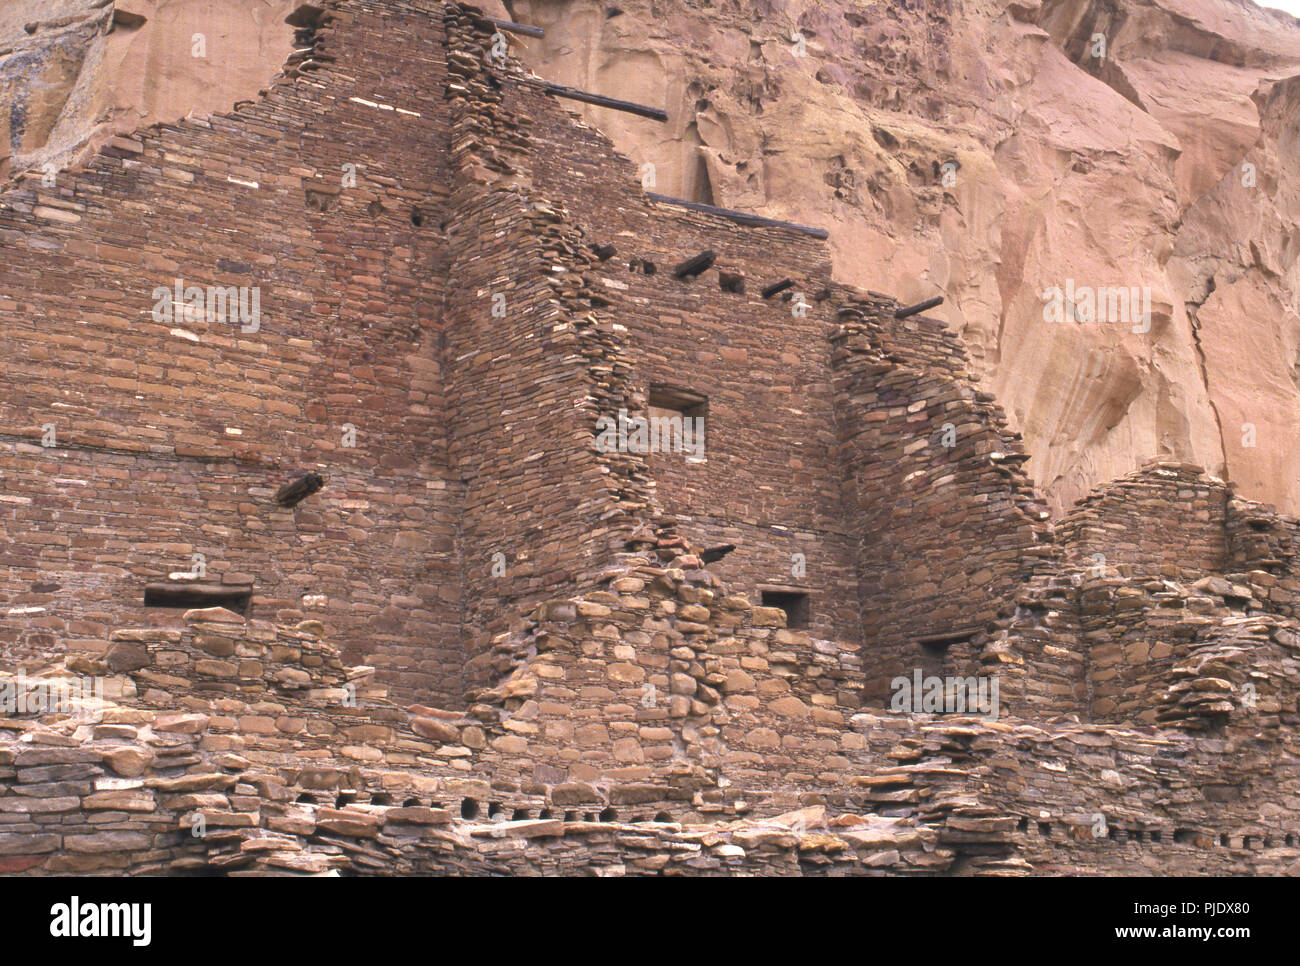 Mehrstöckige gemauerte Wände, Anasazi Ruinen von Pueblo Bonito, Chaco Canyon, New Mexiko. Foto Stockfoto